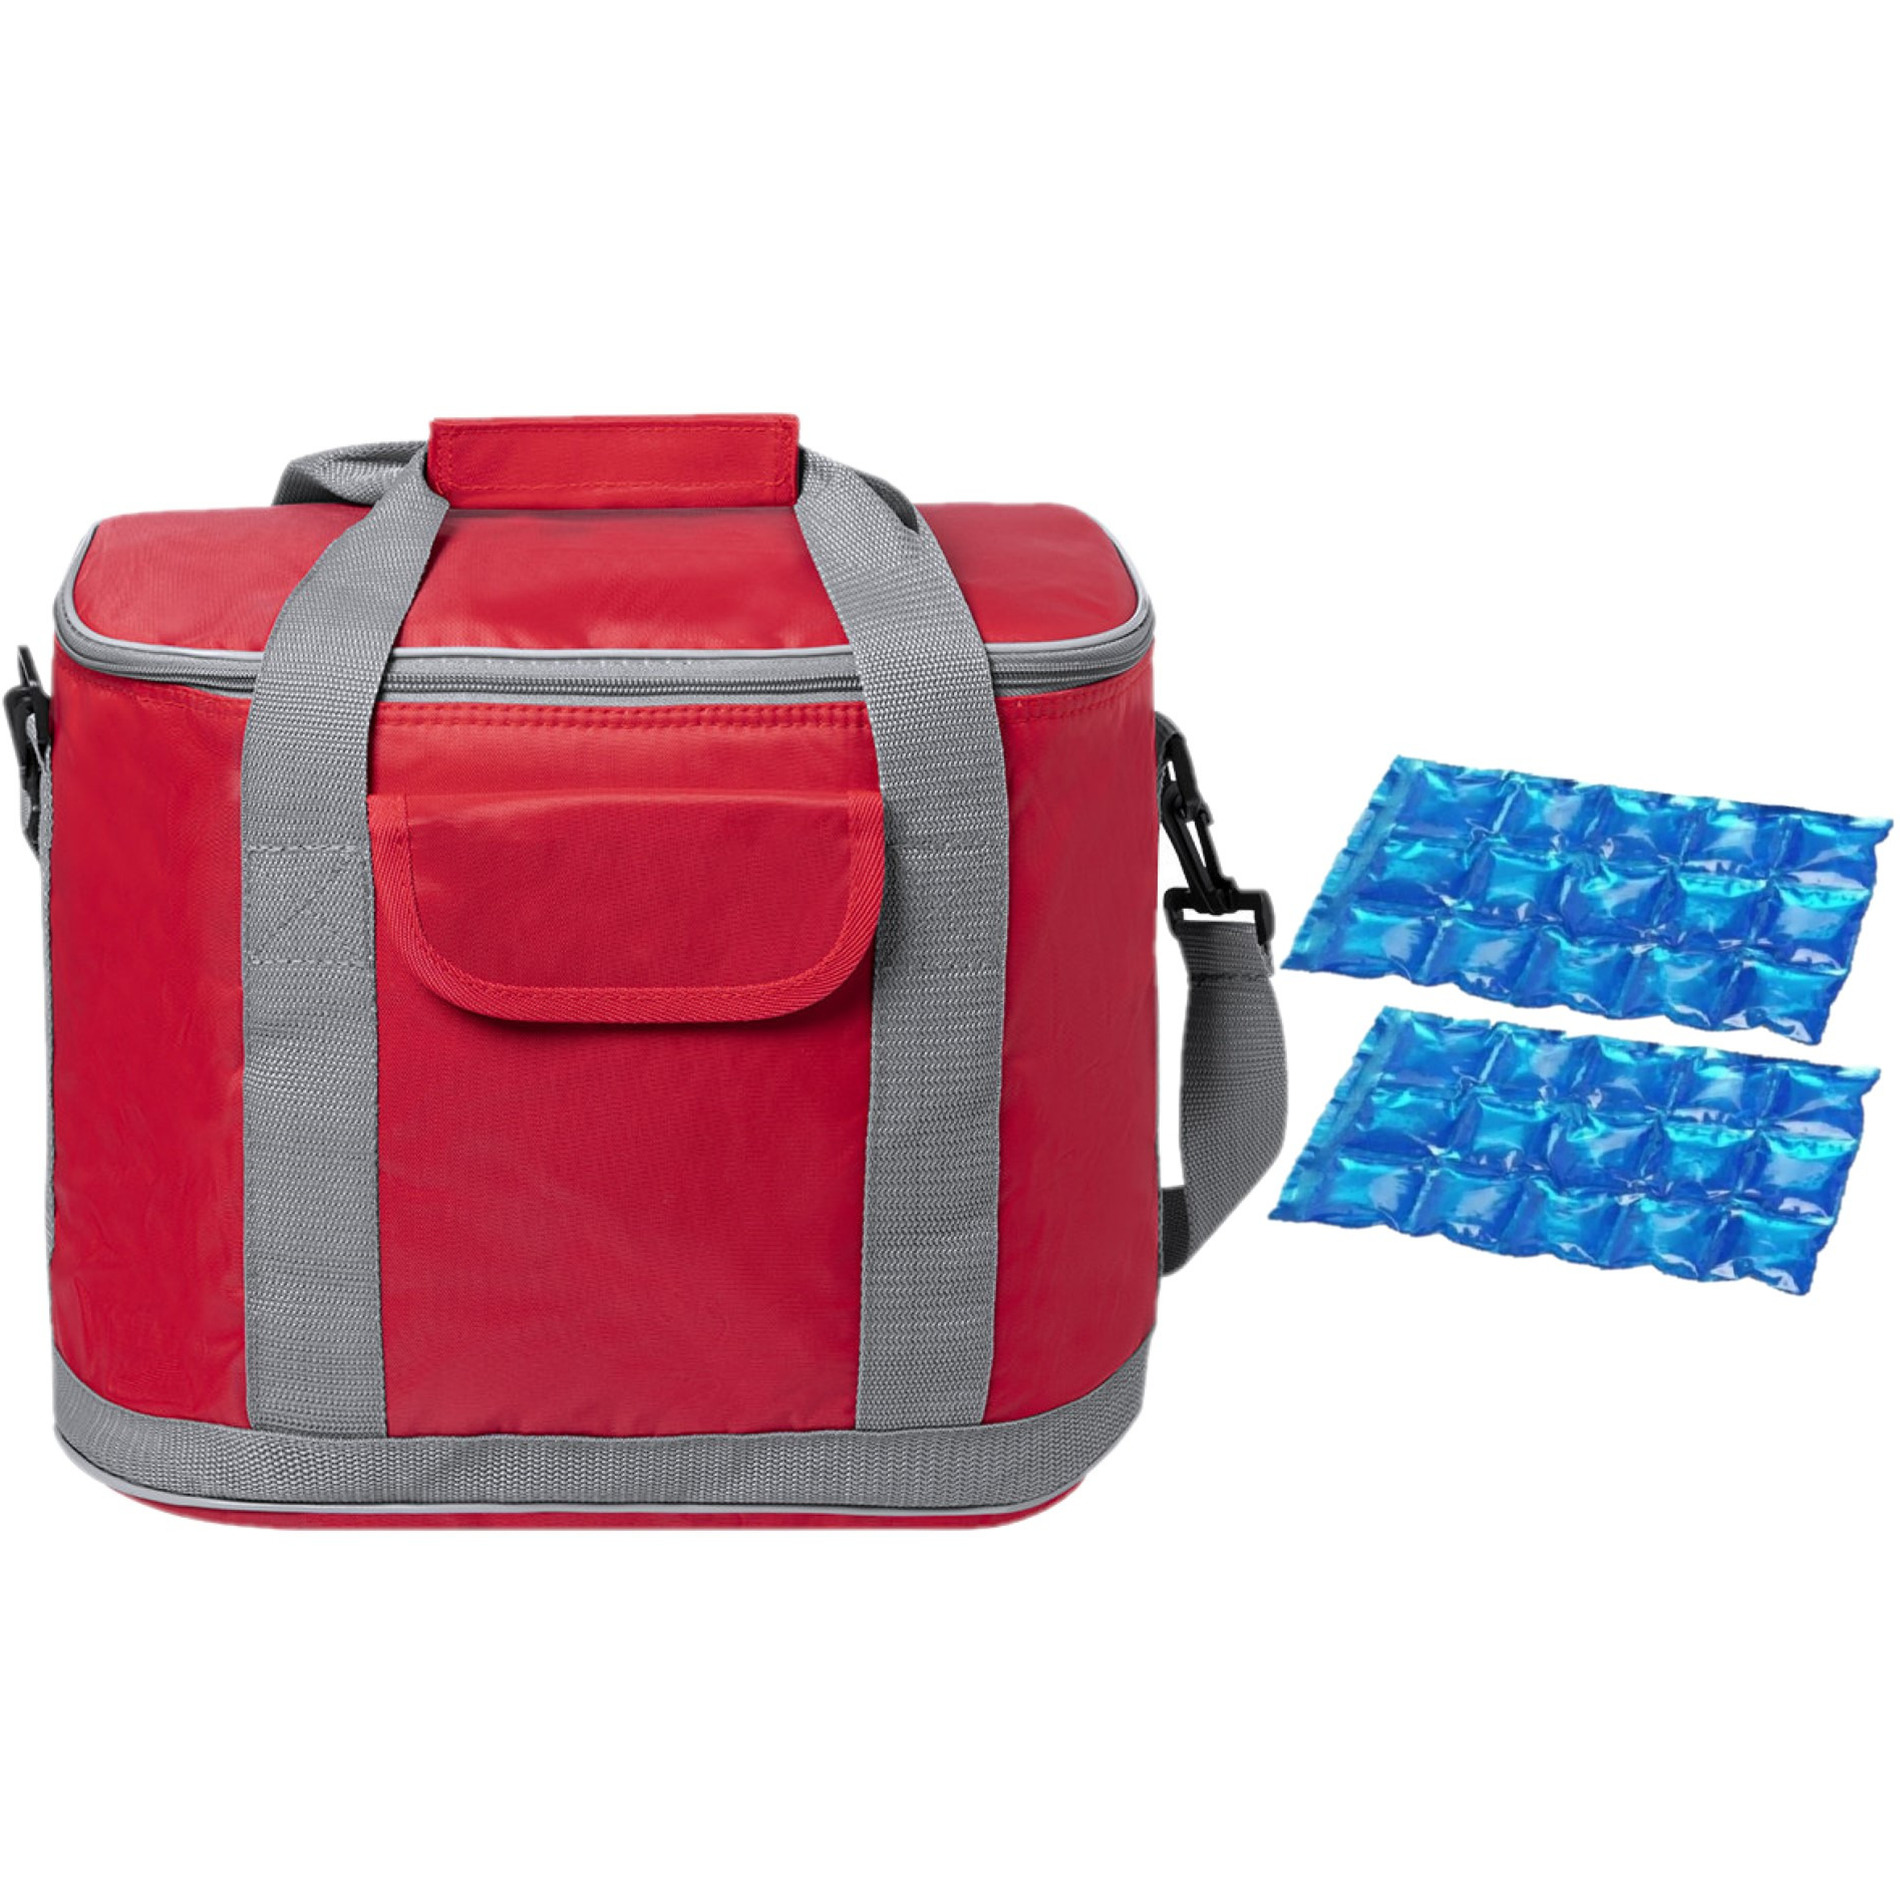 Merkloos Grote koeltas draagtas/schoudertas rood met 2 stuks flexibele koelelementen 22 liter -